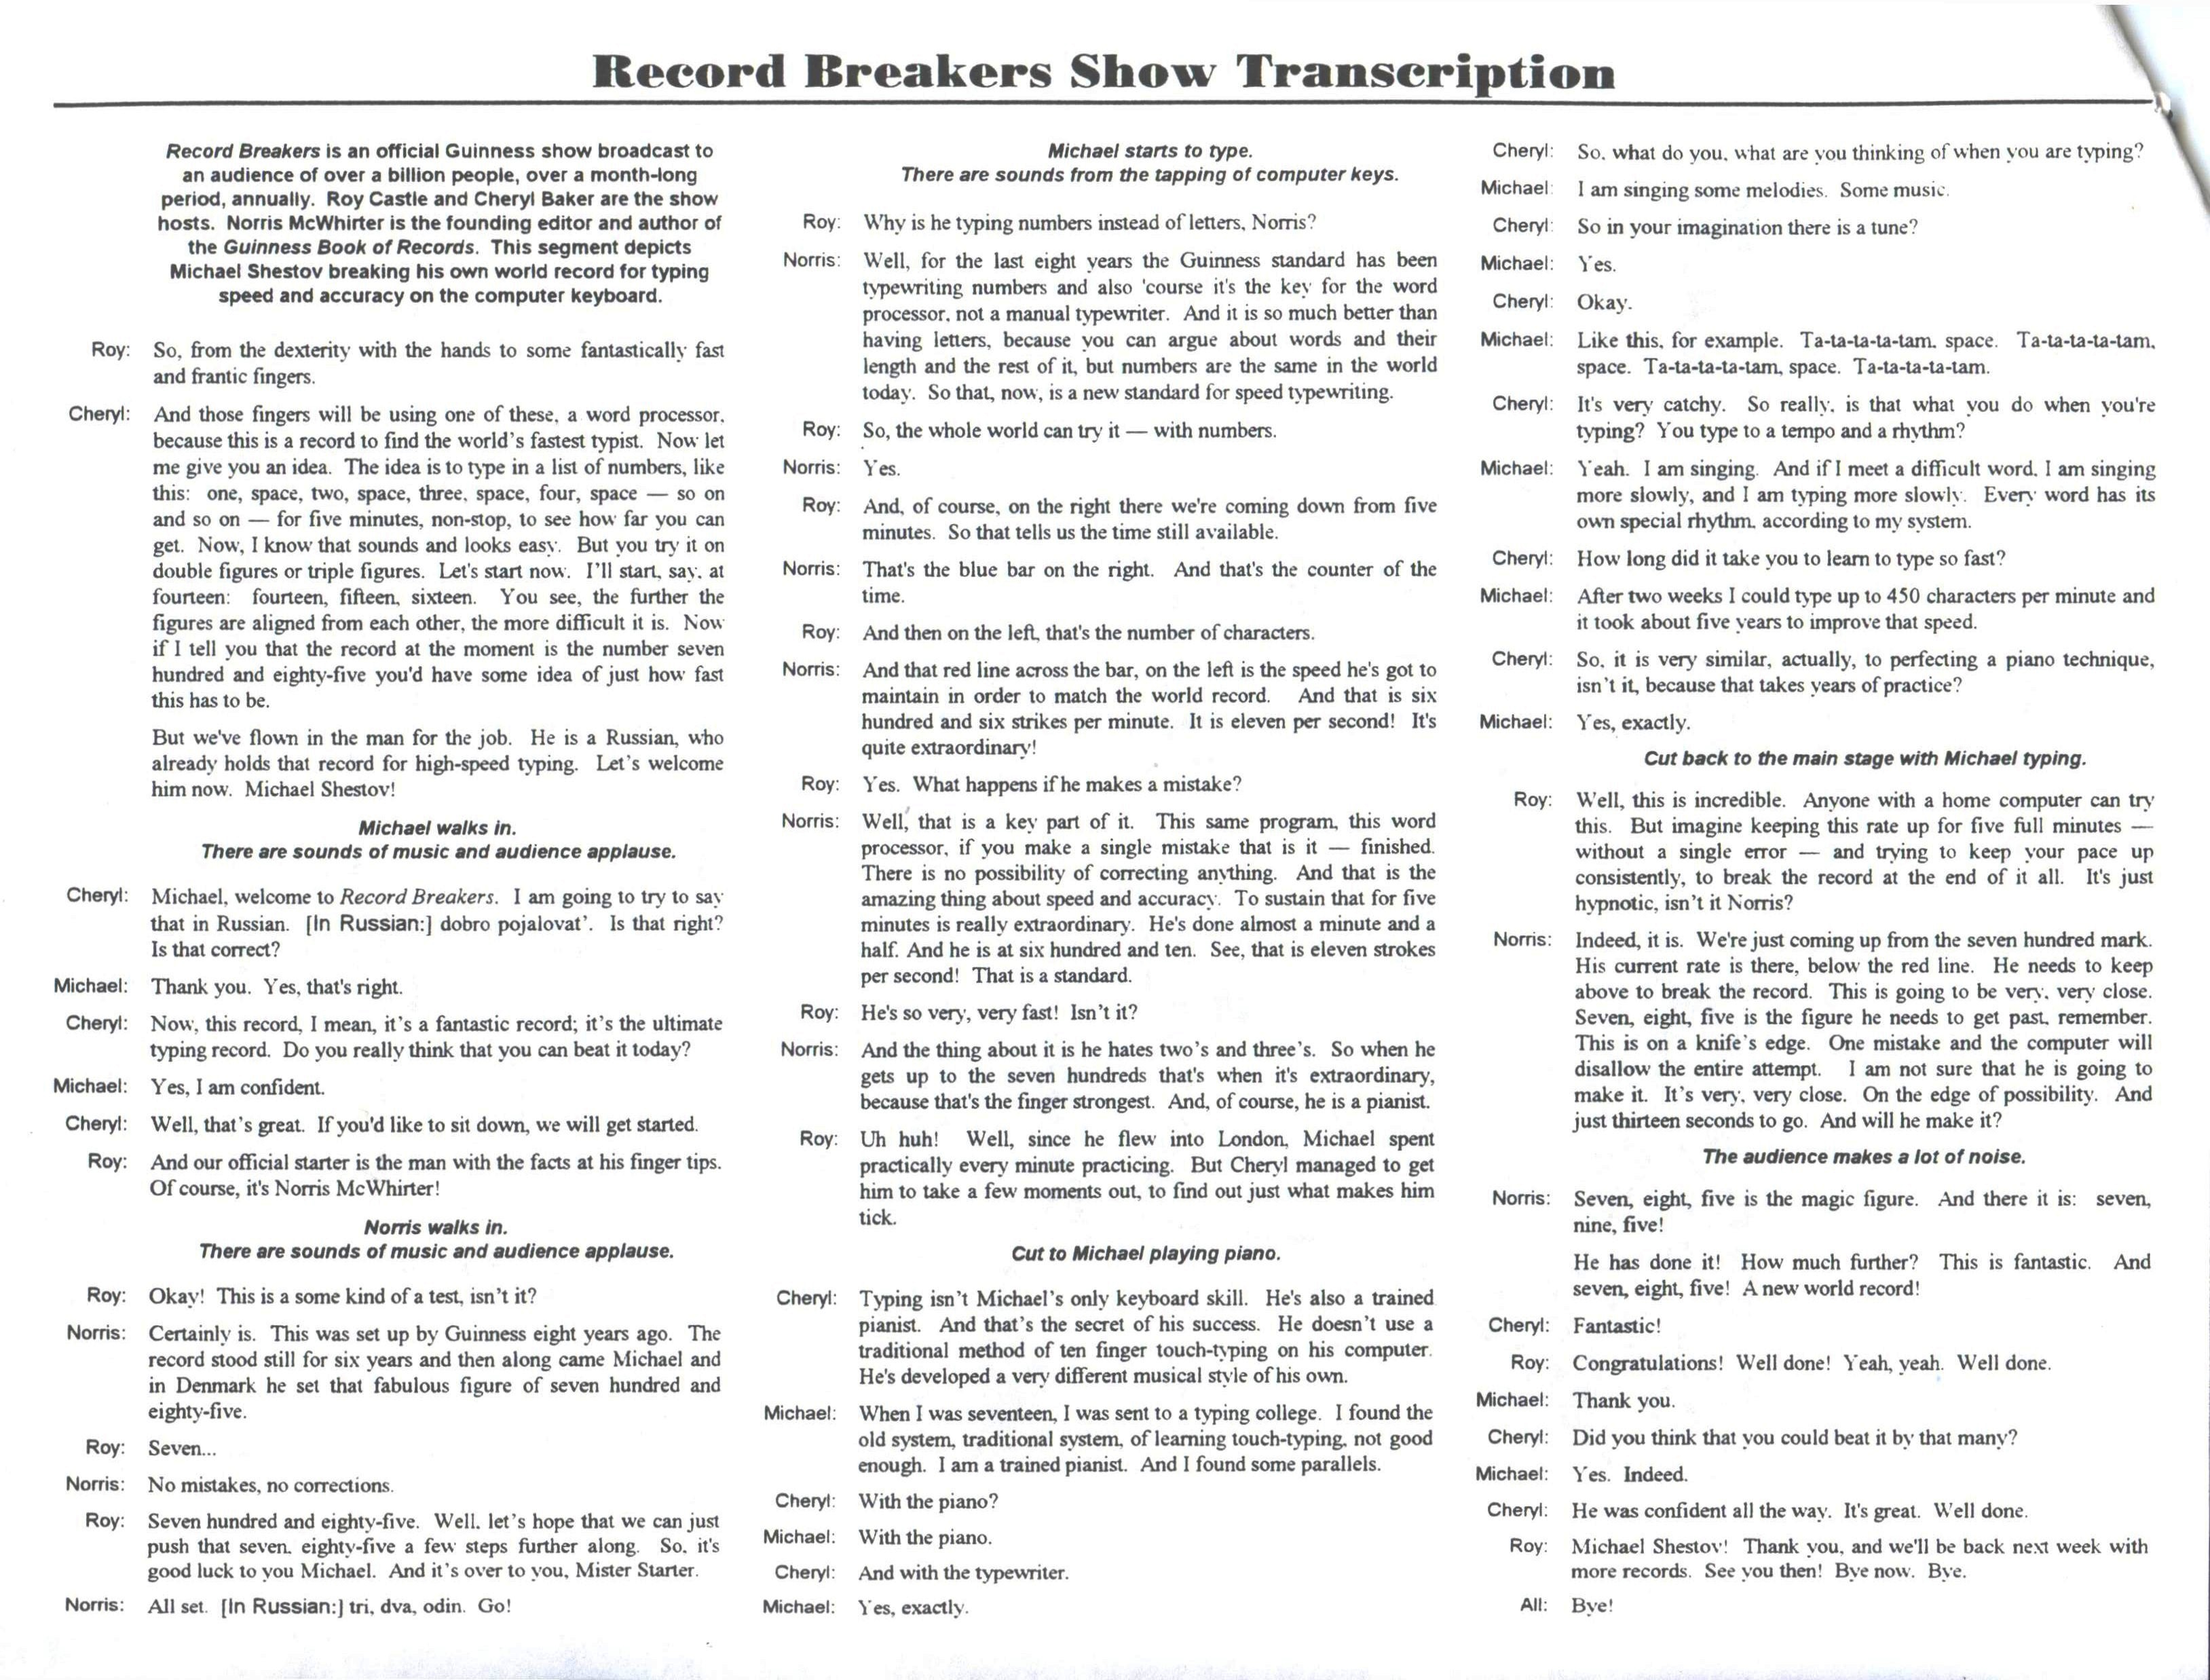 RecordBreakersShowTranscription.jpg